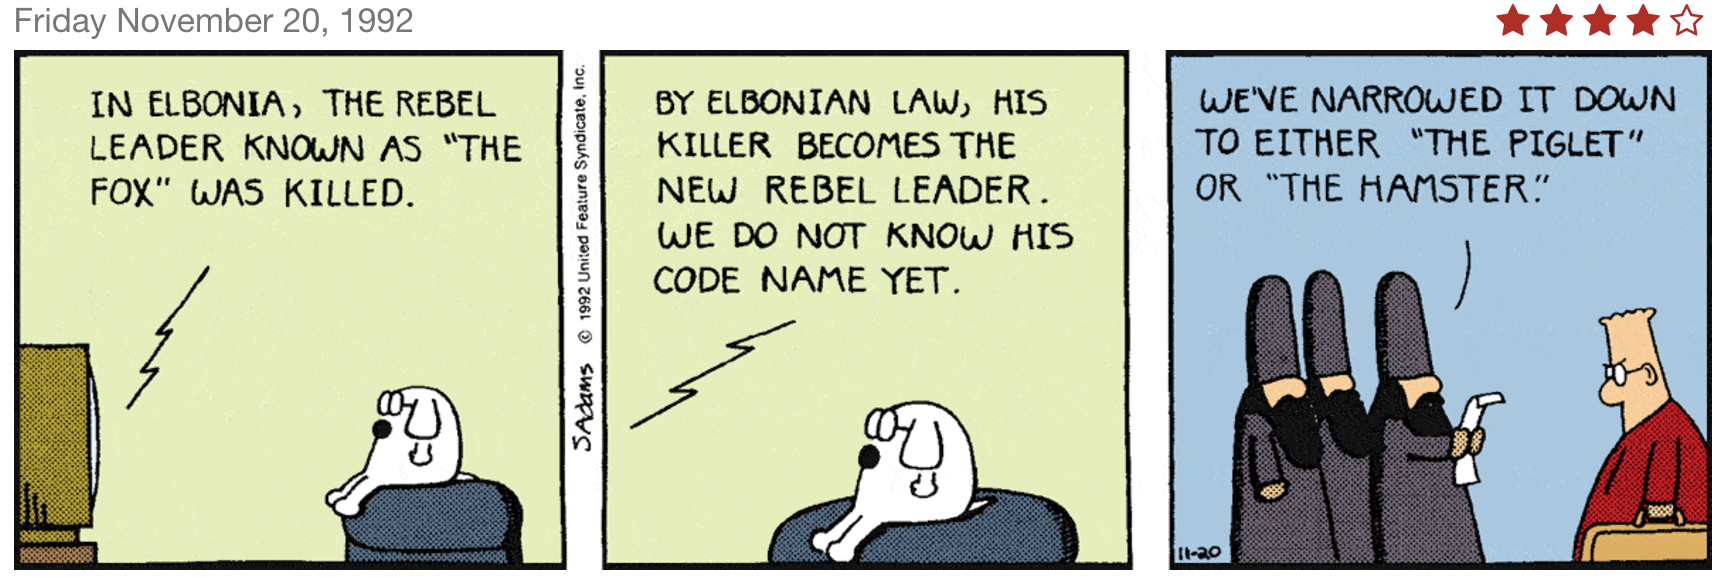 Dilbert Cartoon about Elbonian rebel leaders